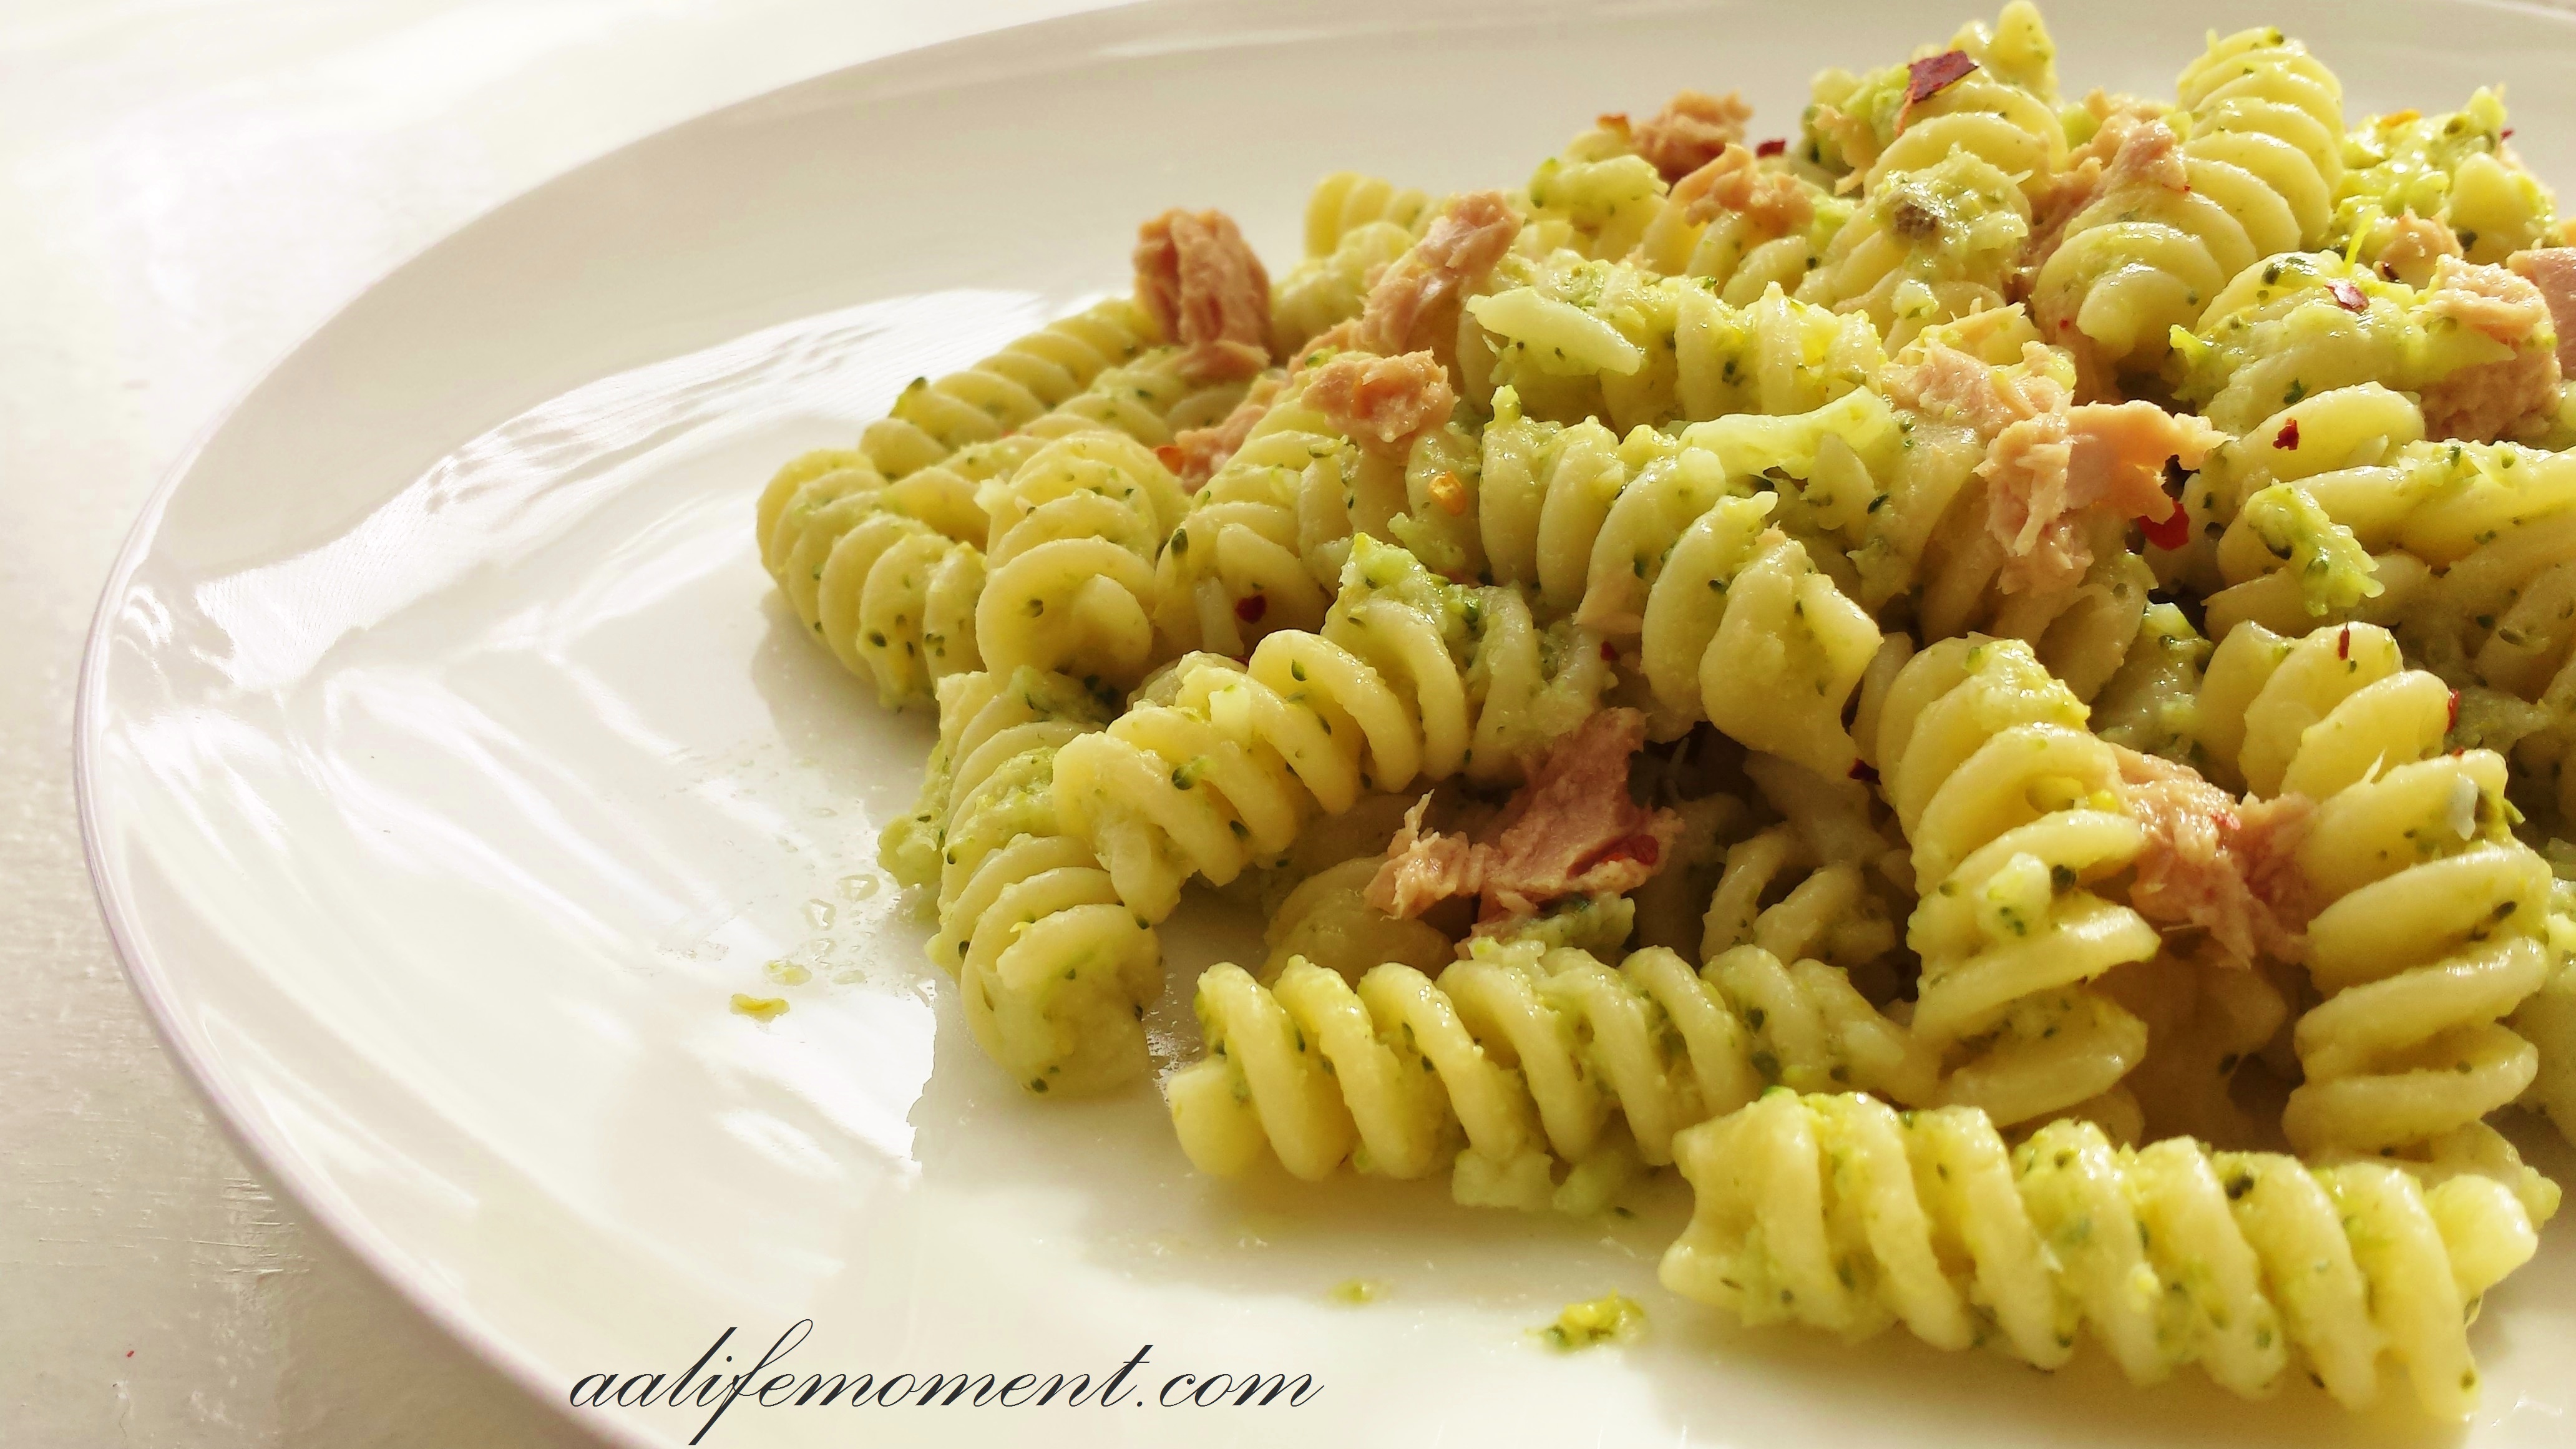 Broccoli Pesto Sauce Recipe with Tuna and Chili